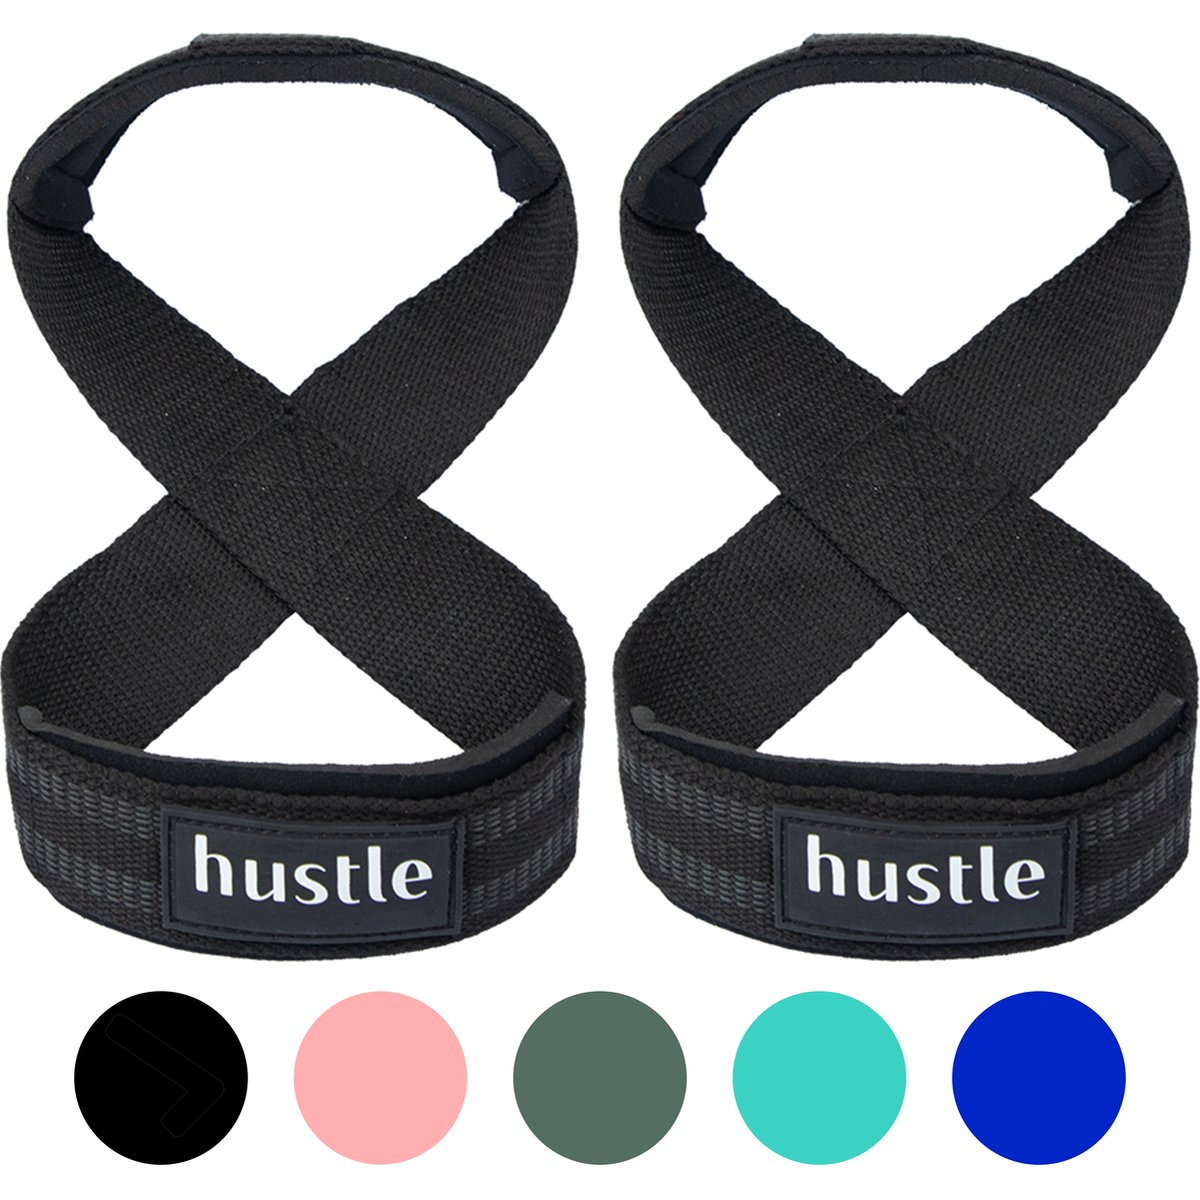 hustle - Zwarte/Grijze Figure 8 Straps - met Padding - Padded - Lifting Grips/Hooks/Straps - Maat M - 1 Paar